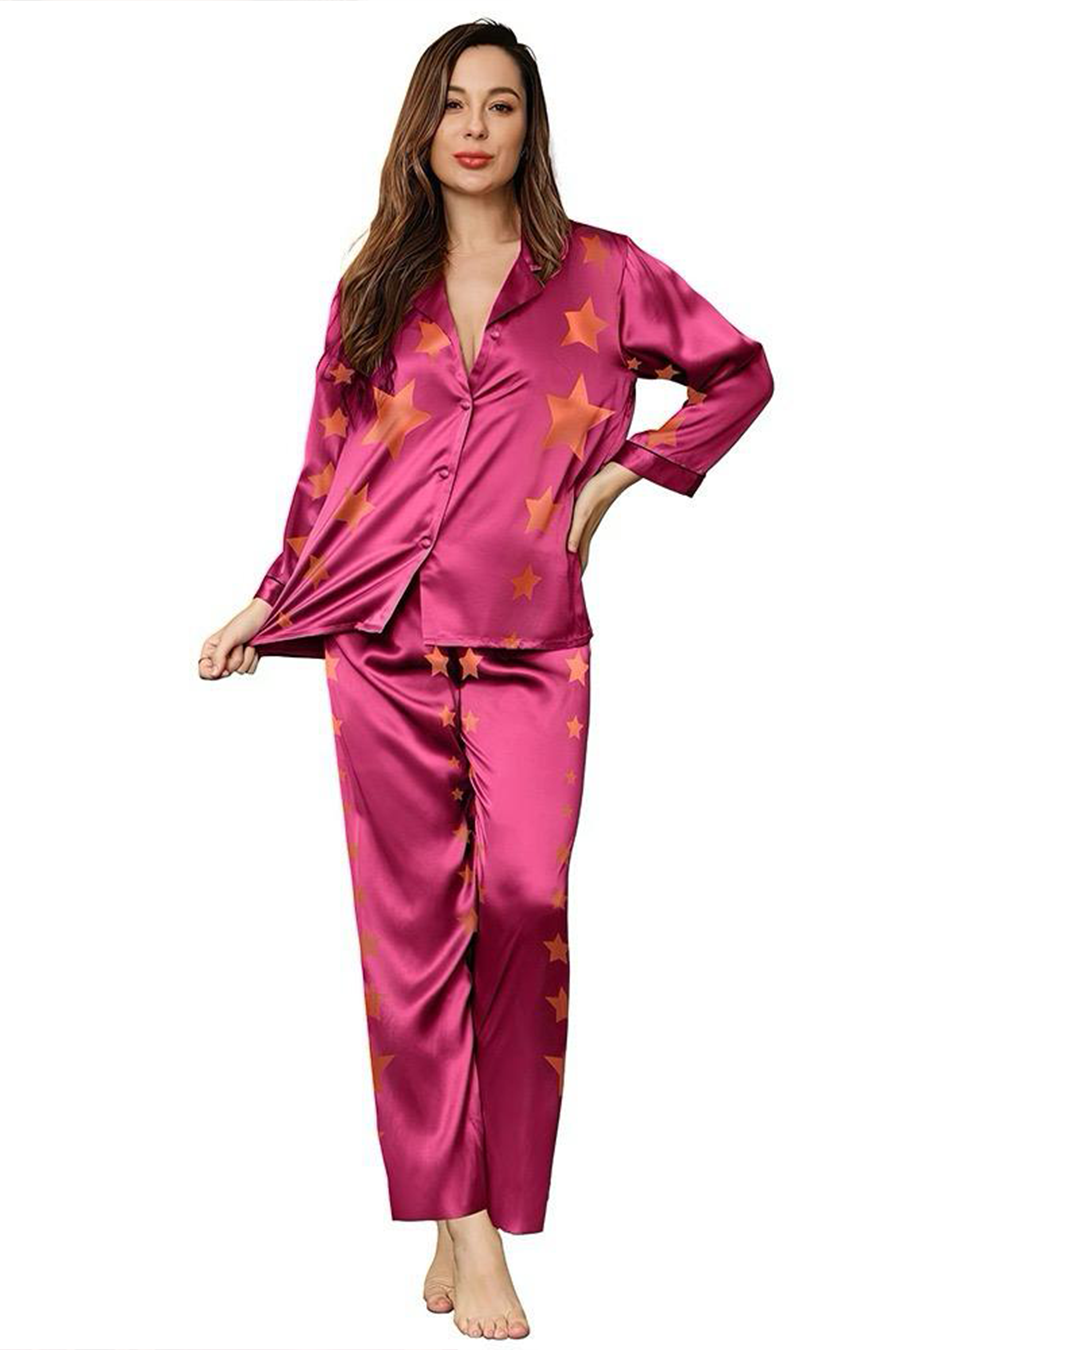 Women's pajamas with star satin buttons